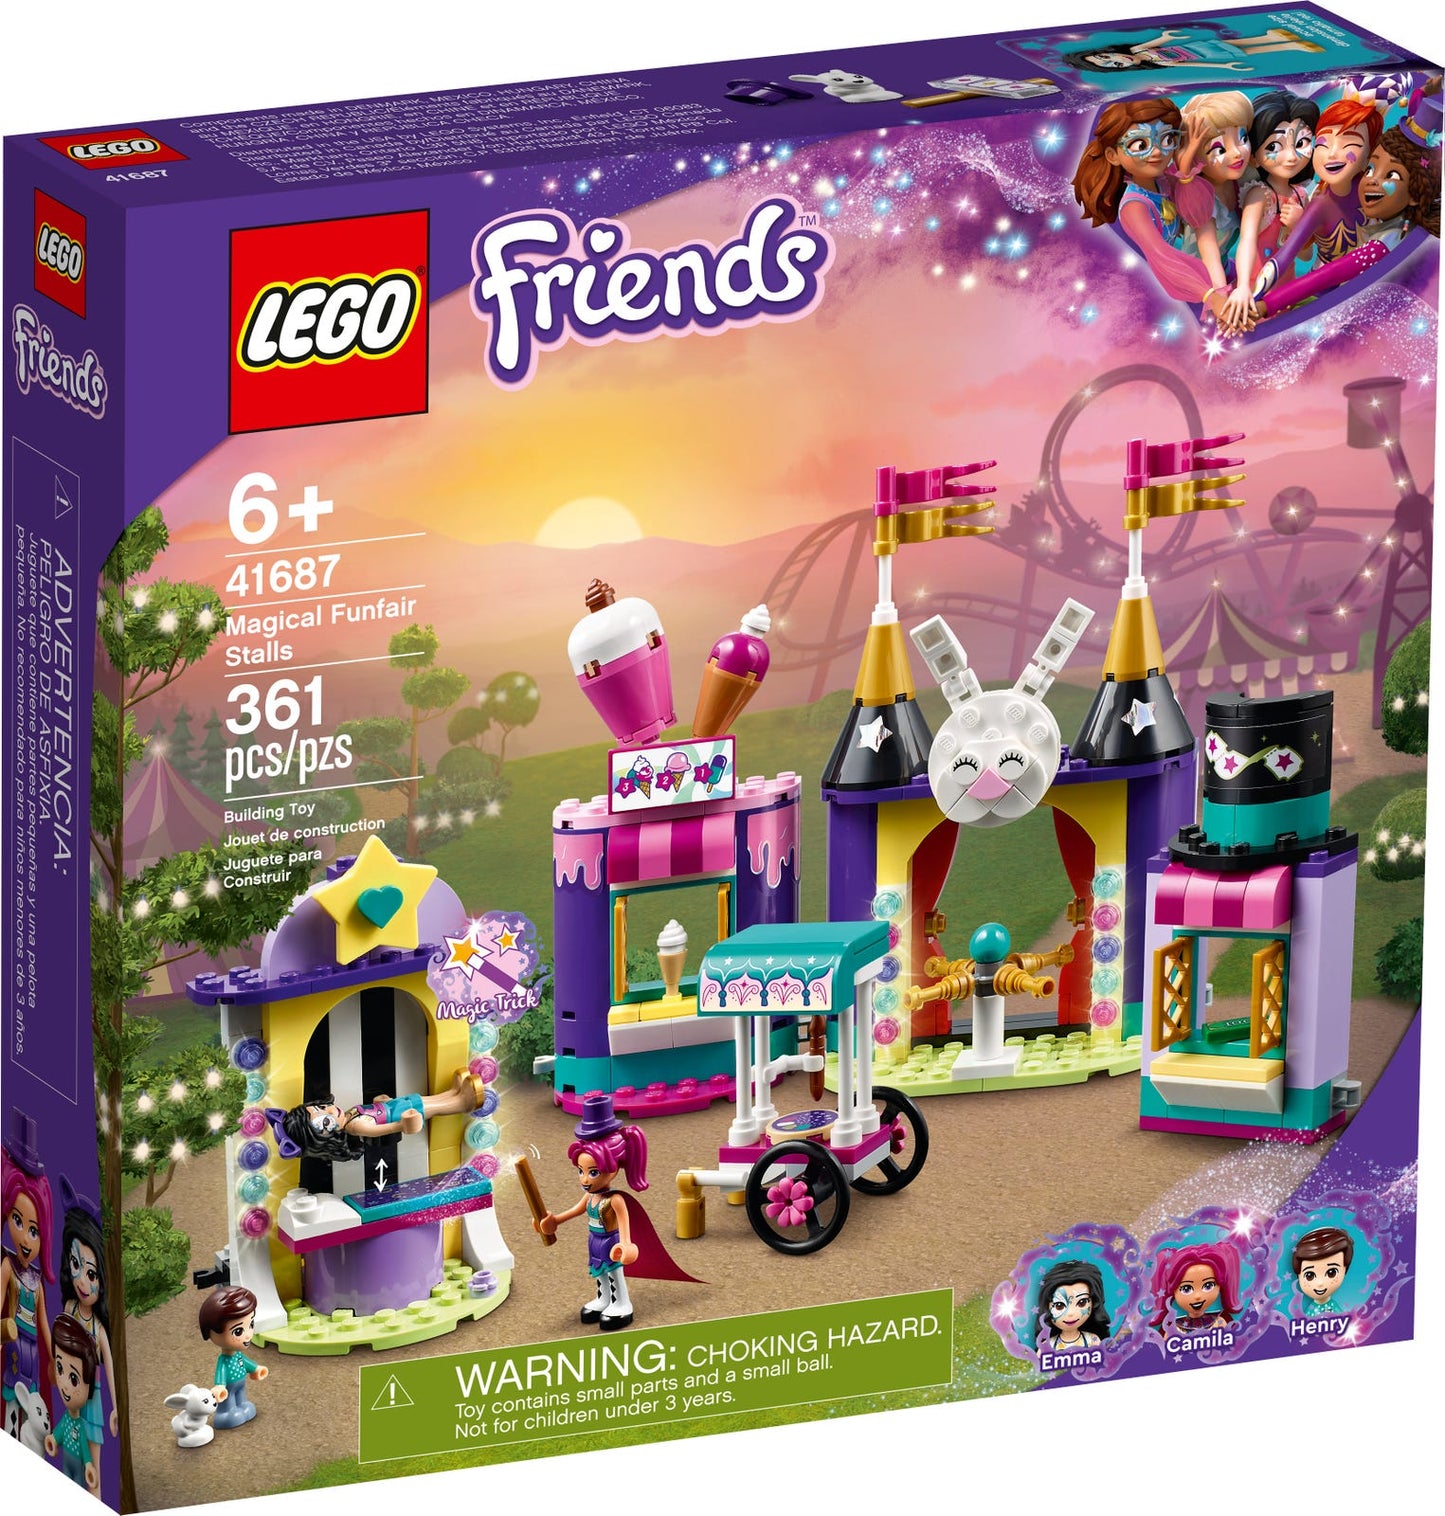 Lego Friends Magical Funfair Stalls